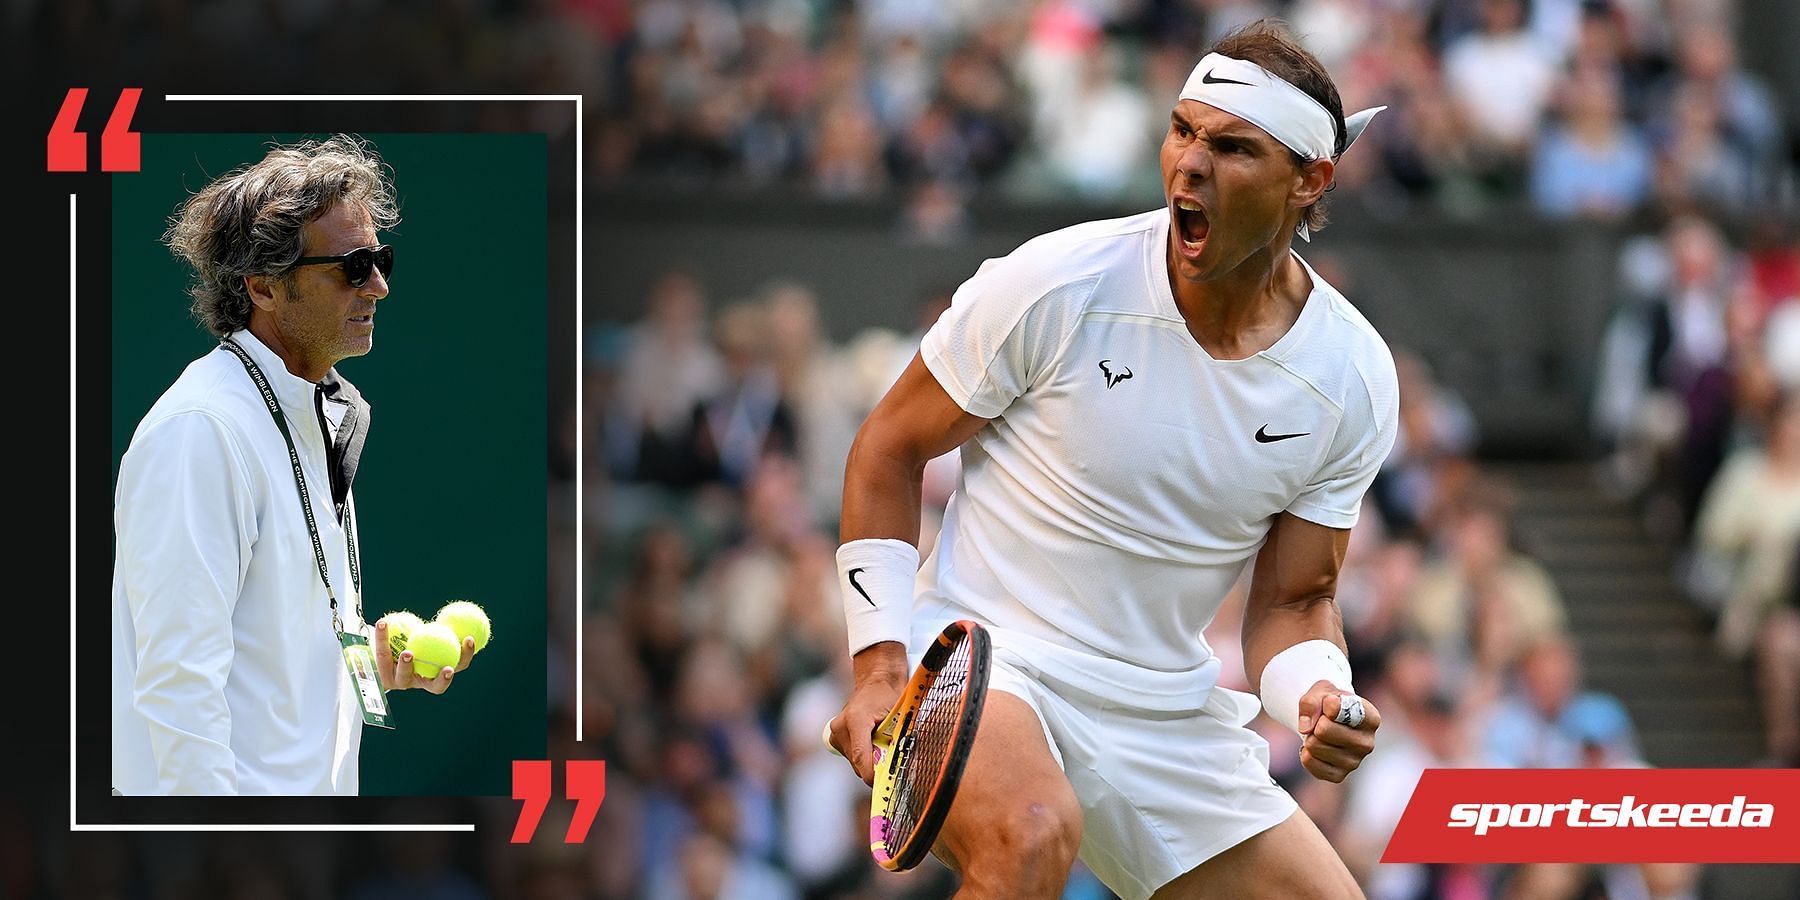 Rafael Nadal reaches the Wimbledon quarterfinals